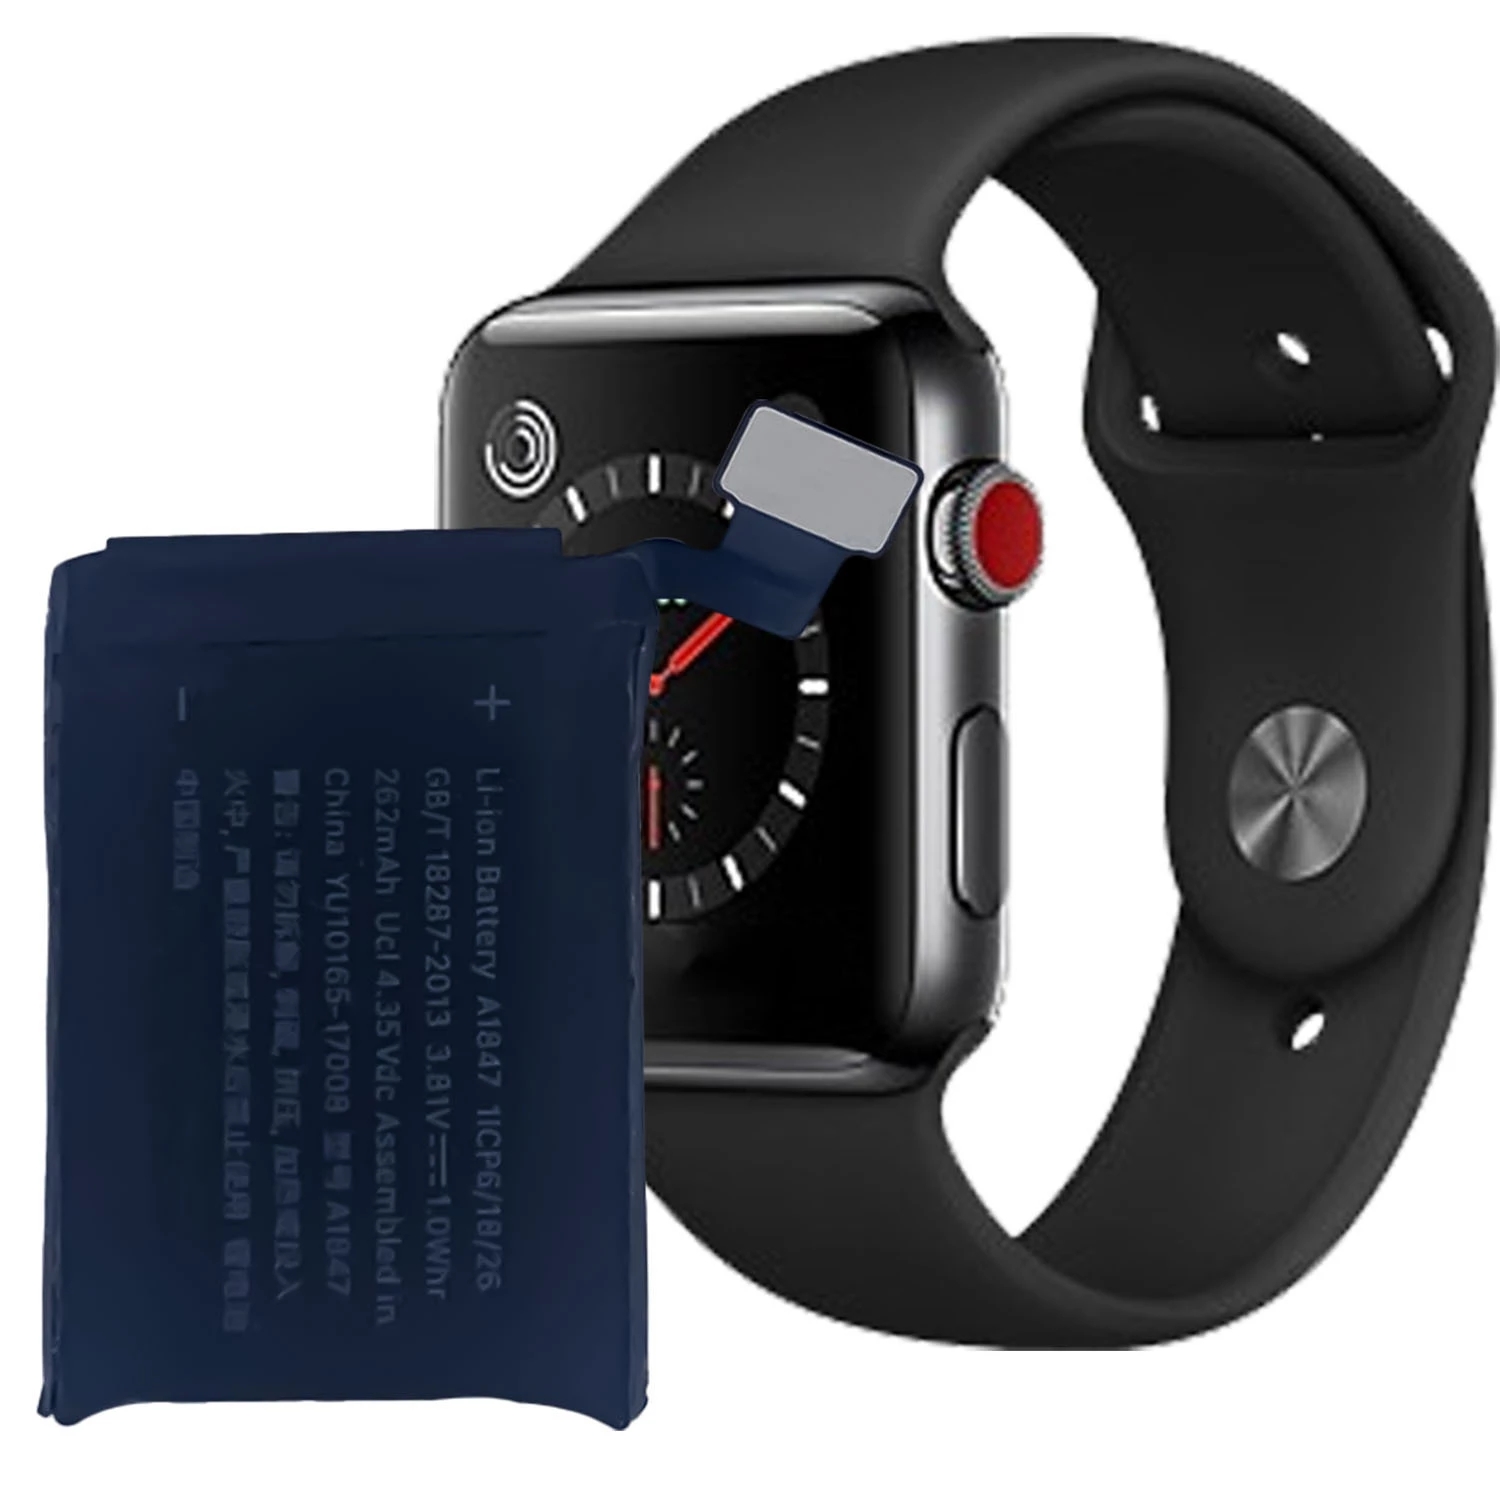 Apple Watch A1847 Battery